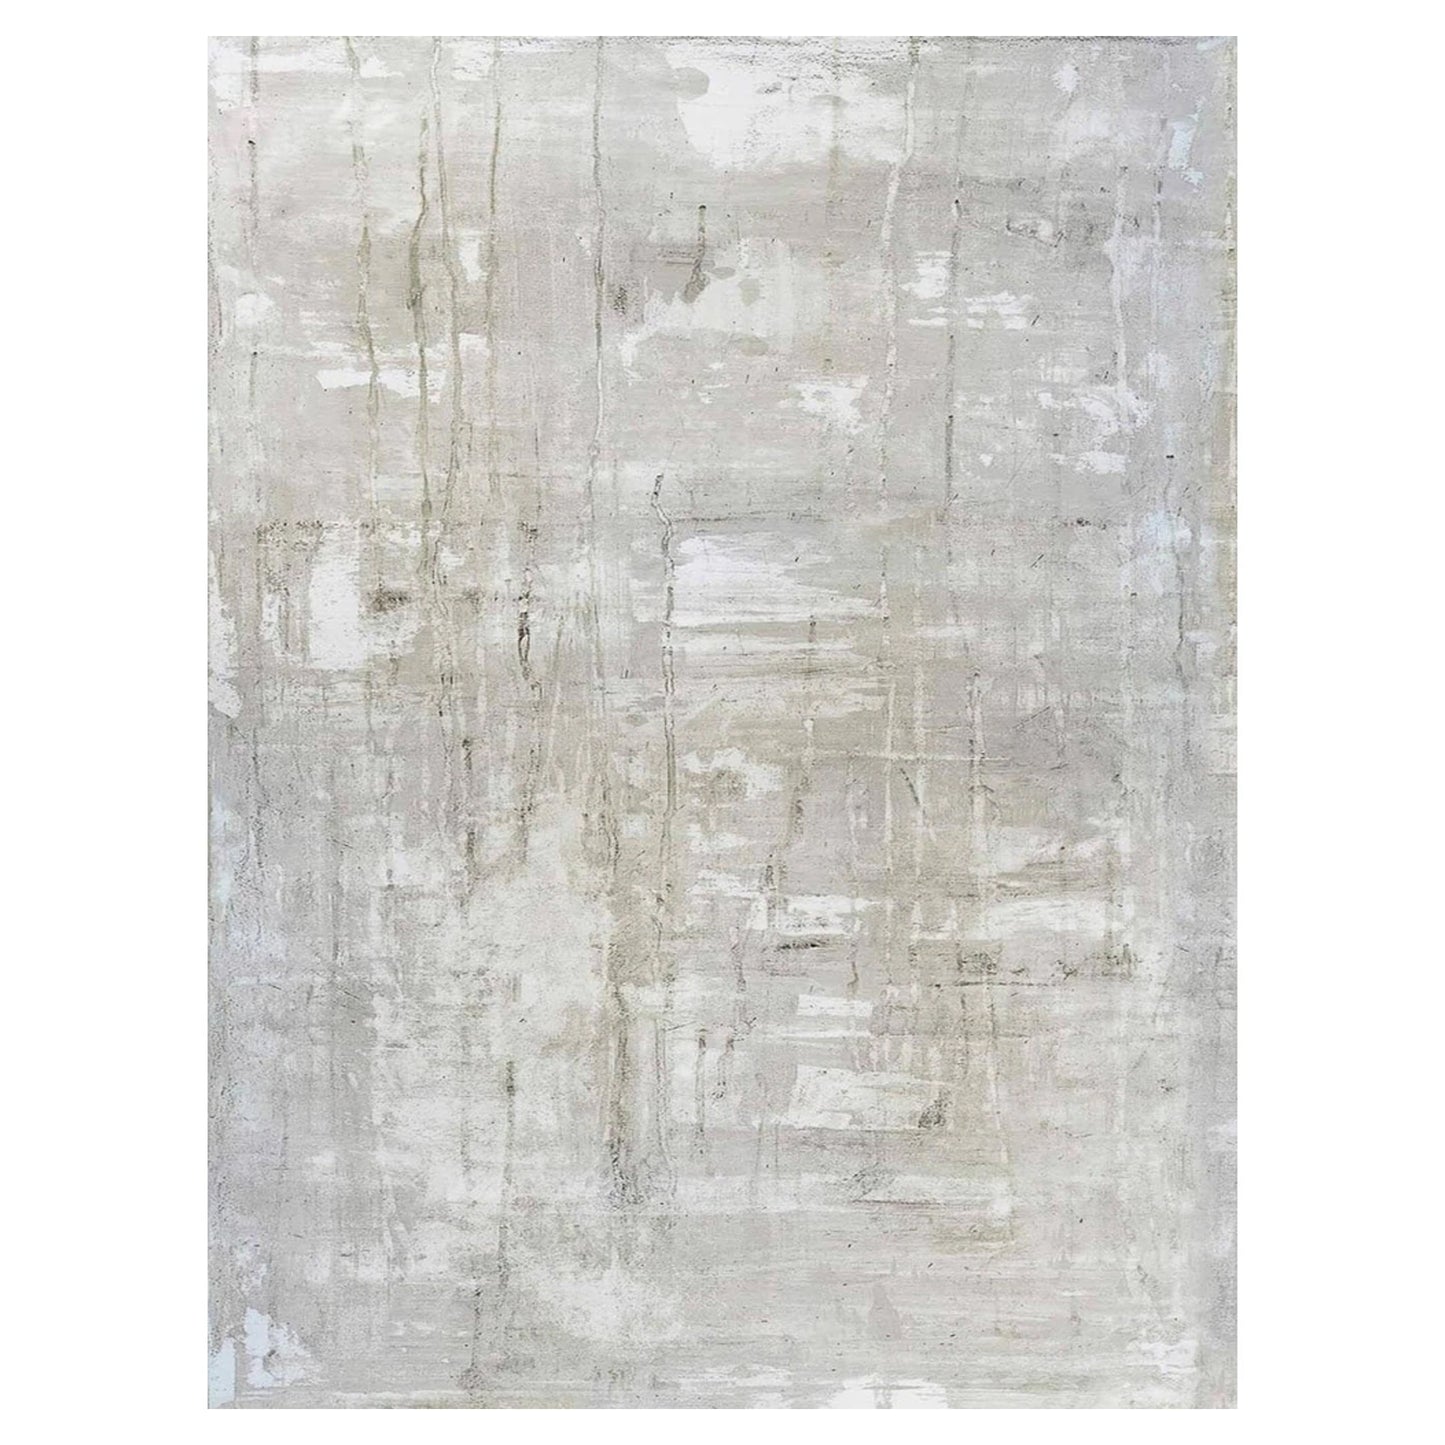 Gray on White I Abstract Art